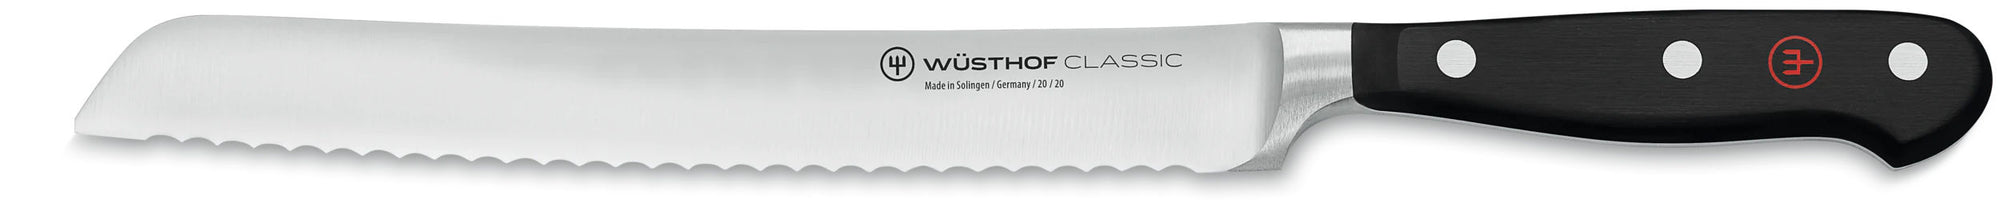 Wusthof Classic Bread Knife, 8-inch (20 cm), Serrated - 4149